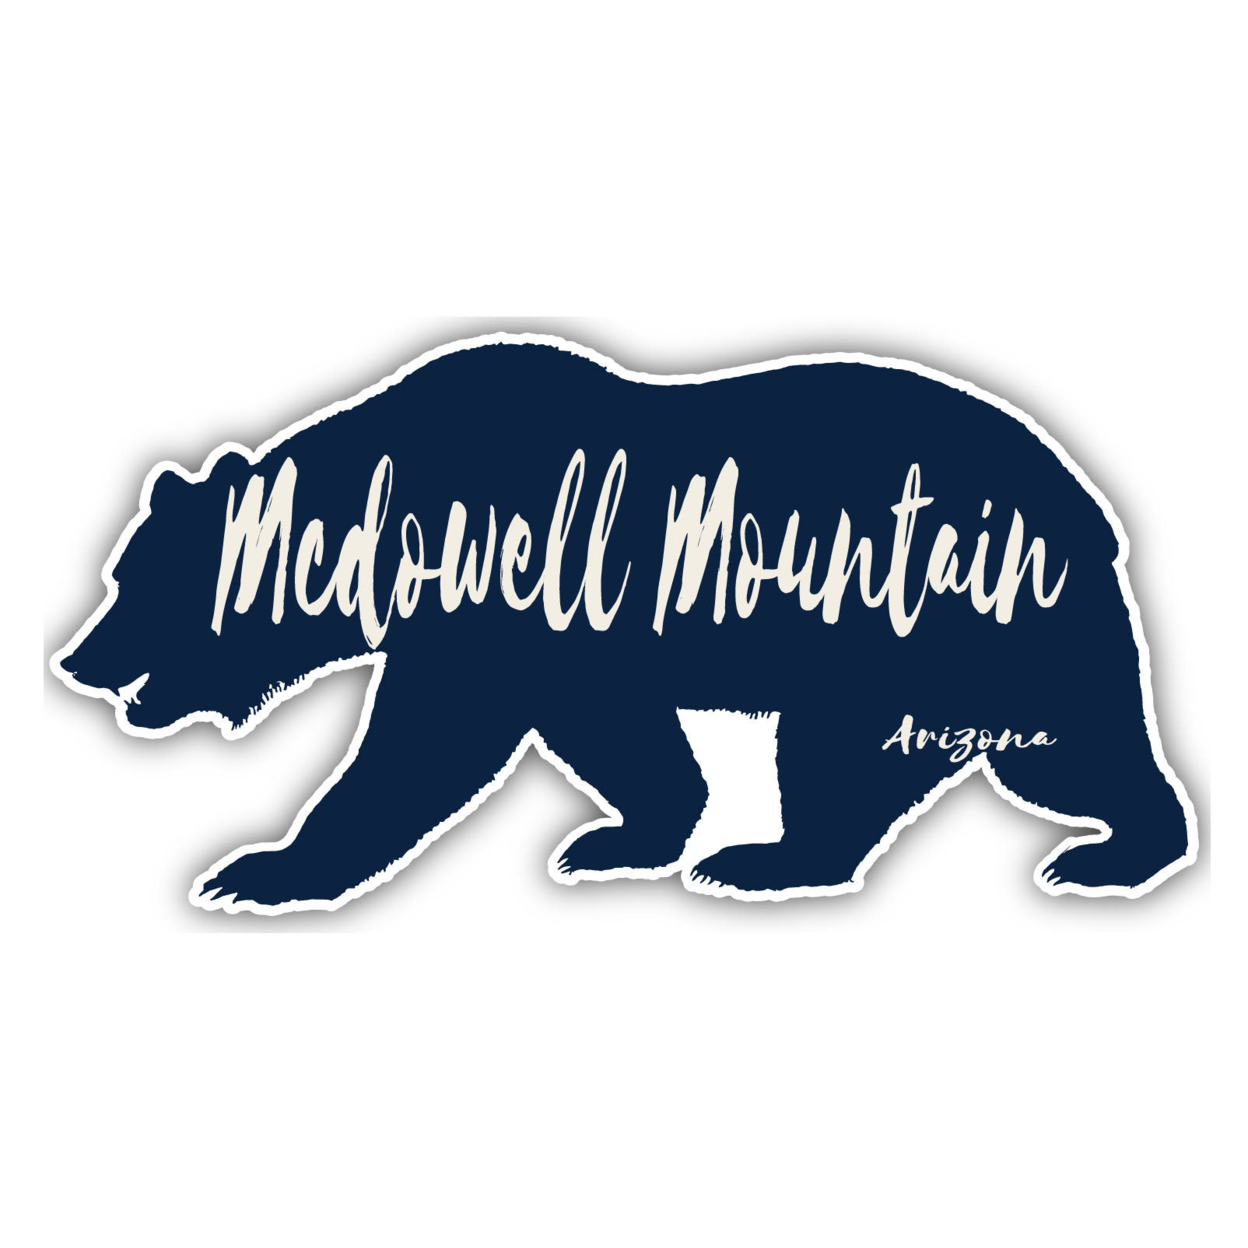 Mcdowell Mountain Arizona Souvenir Decorative Stickers (Choose Theme And Size) - 4-Inch, Bear